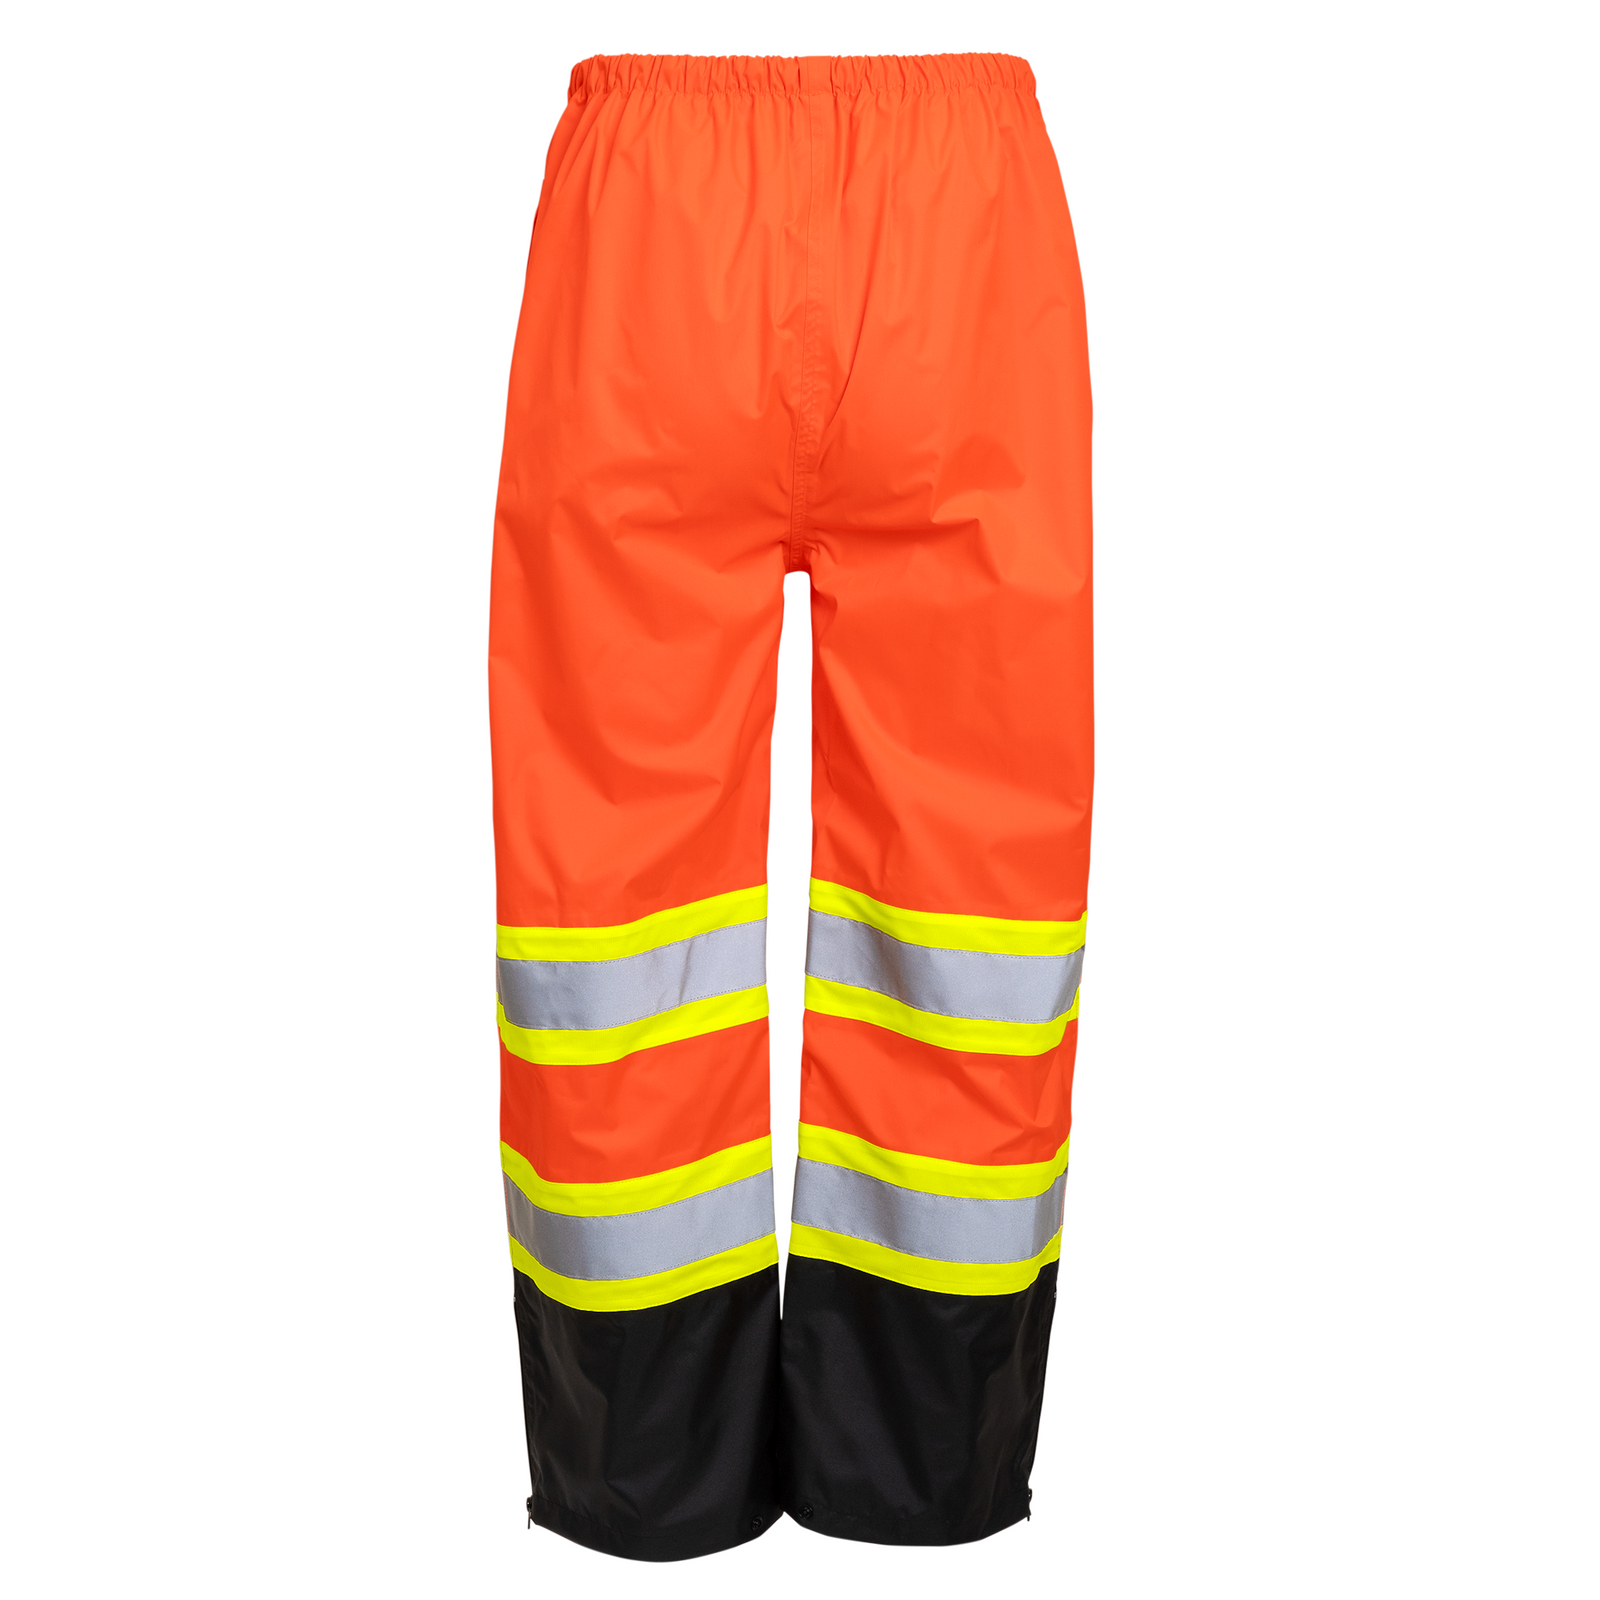 Orange safety rain pants with reflective stripes ANSI/ISEA Class E